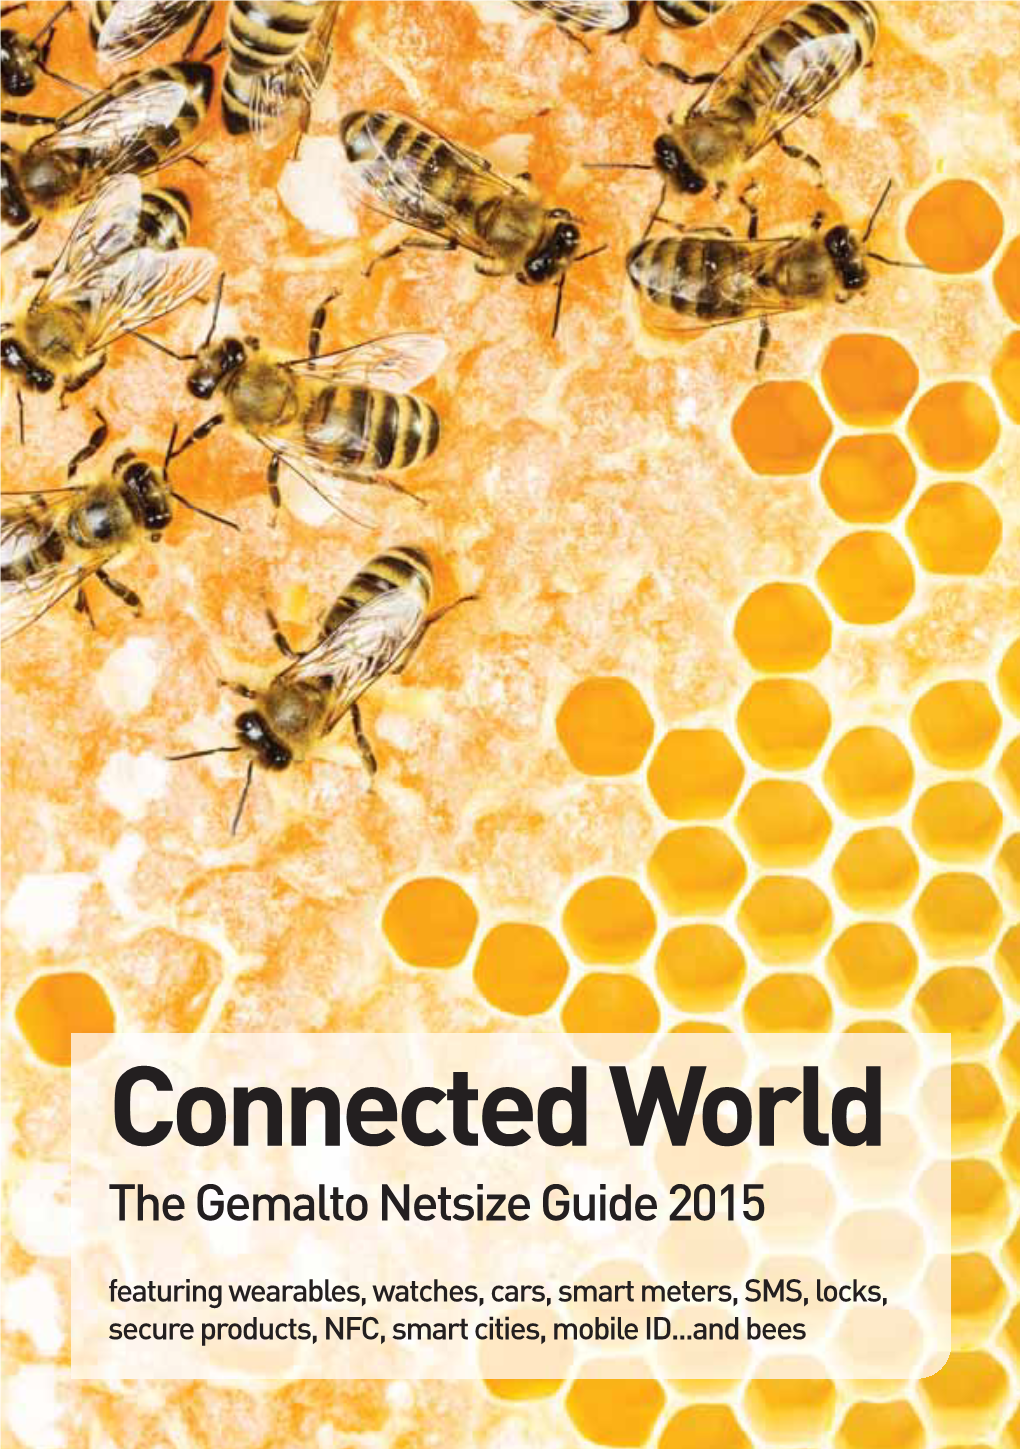 Connected World the Gemalto Netsize Guide 2015